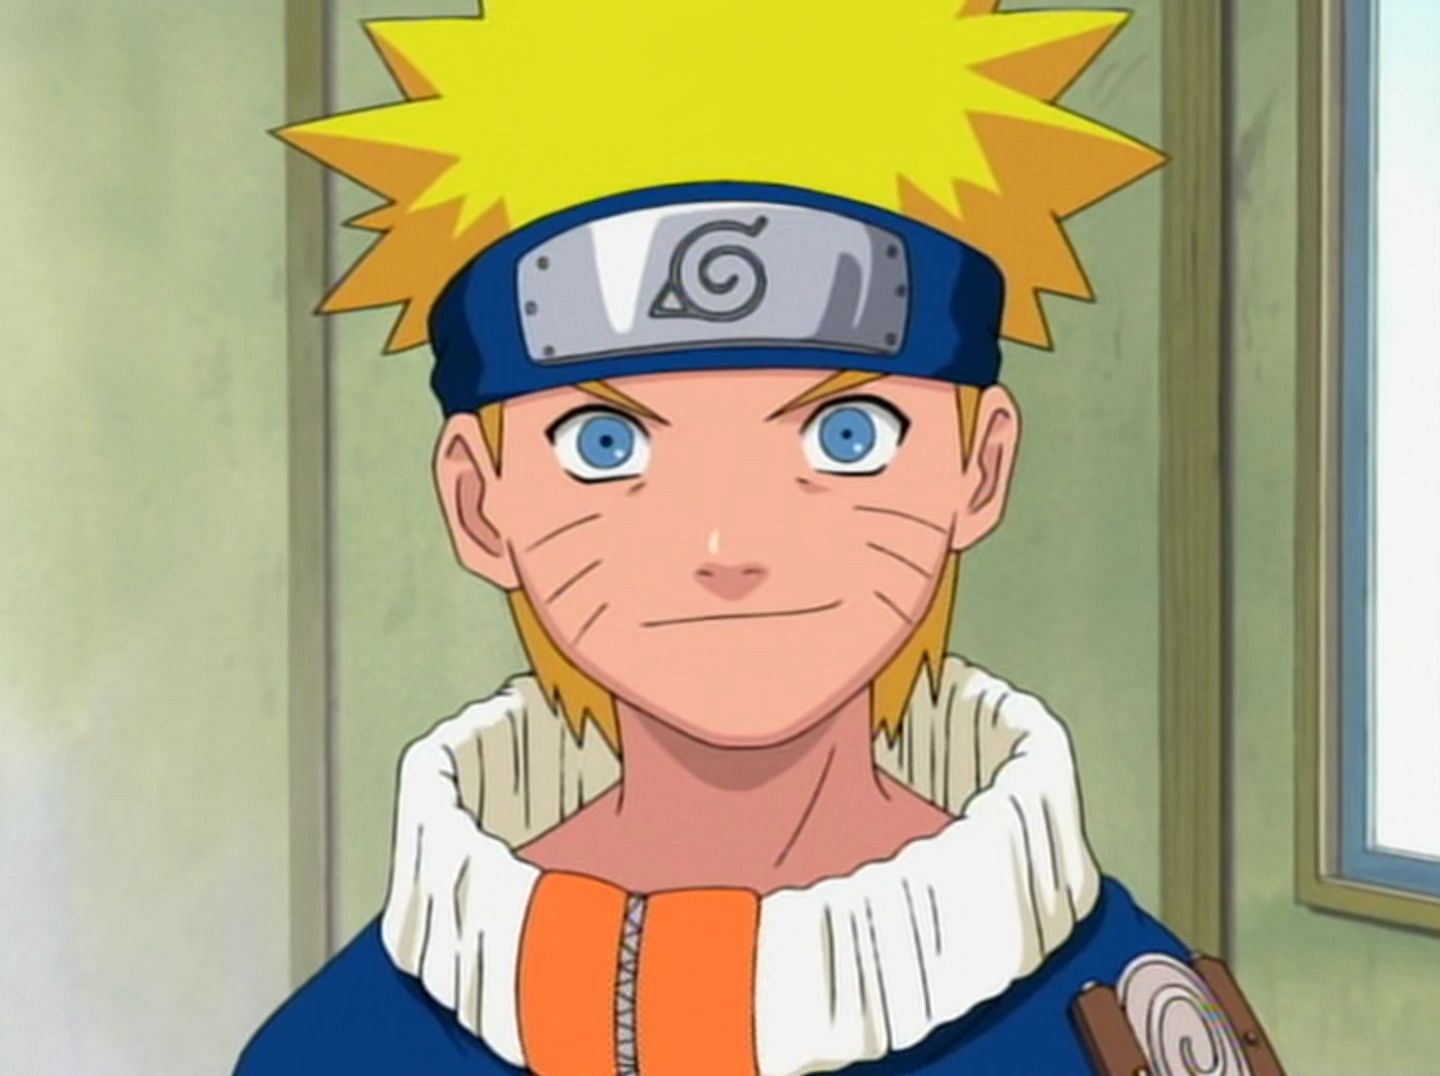 Naruto as he appears in Part 1 (Image via Studio Pierrot)